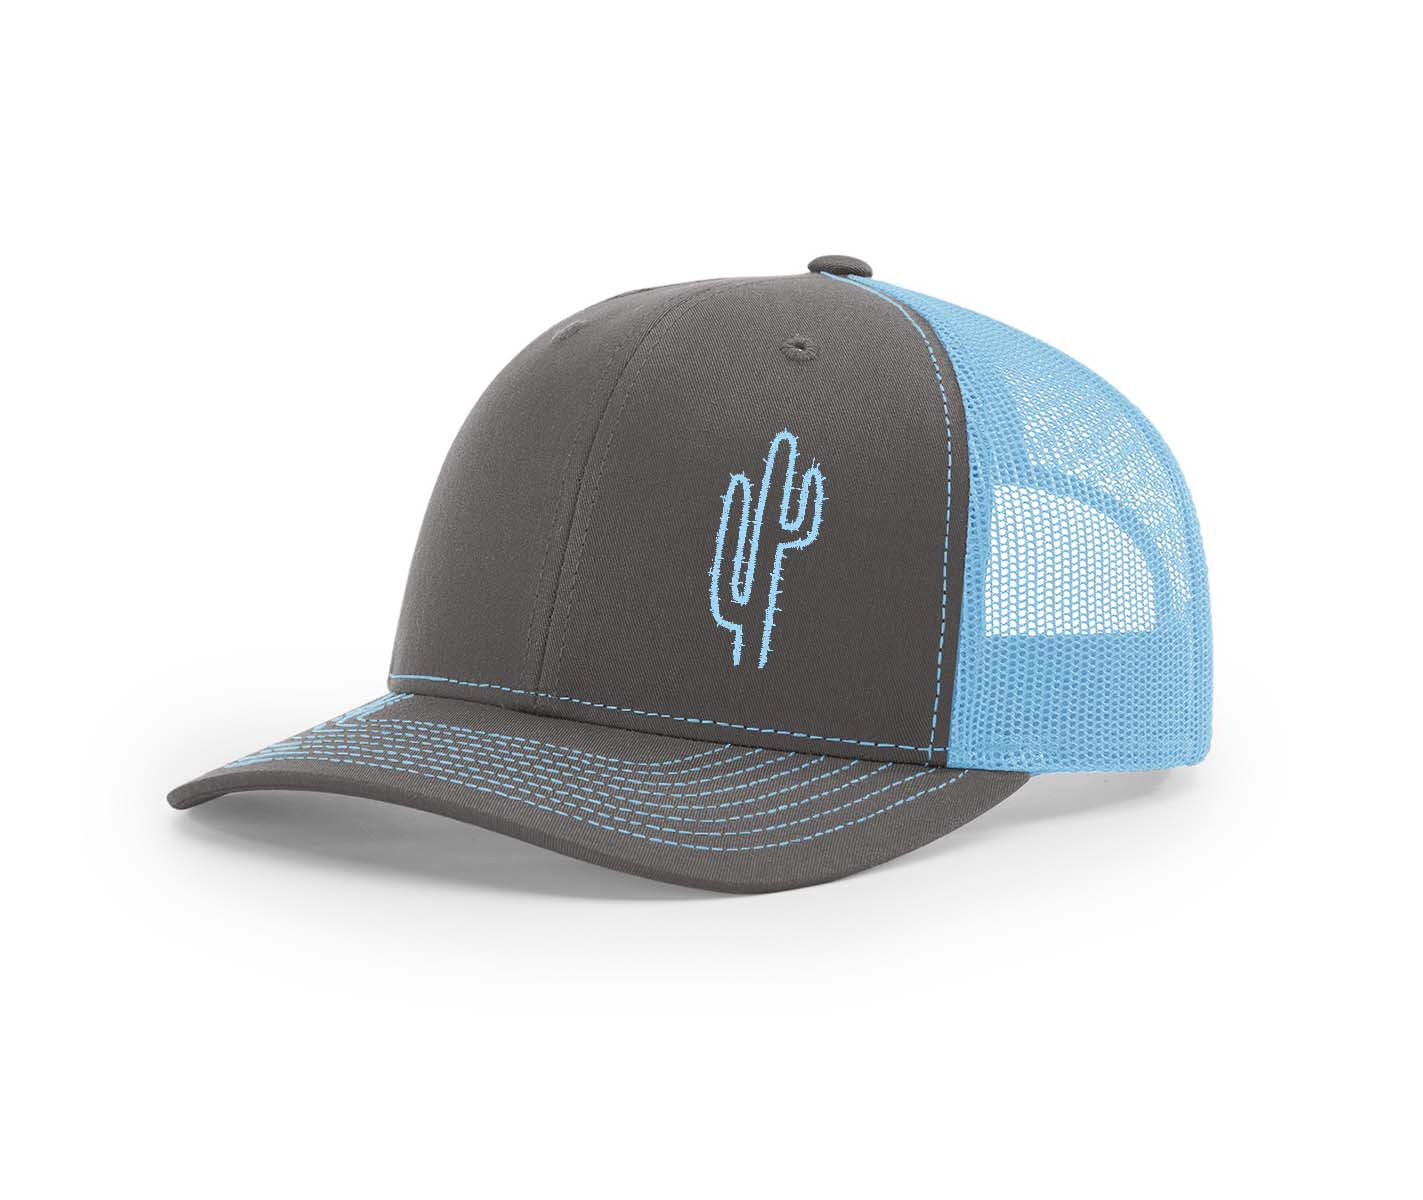 Saguaro Cactus Swamp Cracker Snapback Hat, Charcoal/Columbia Blue